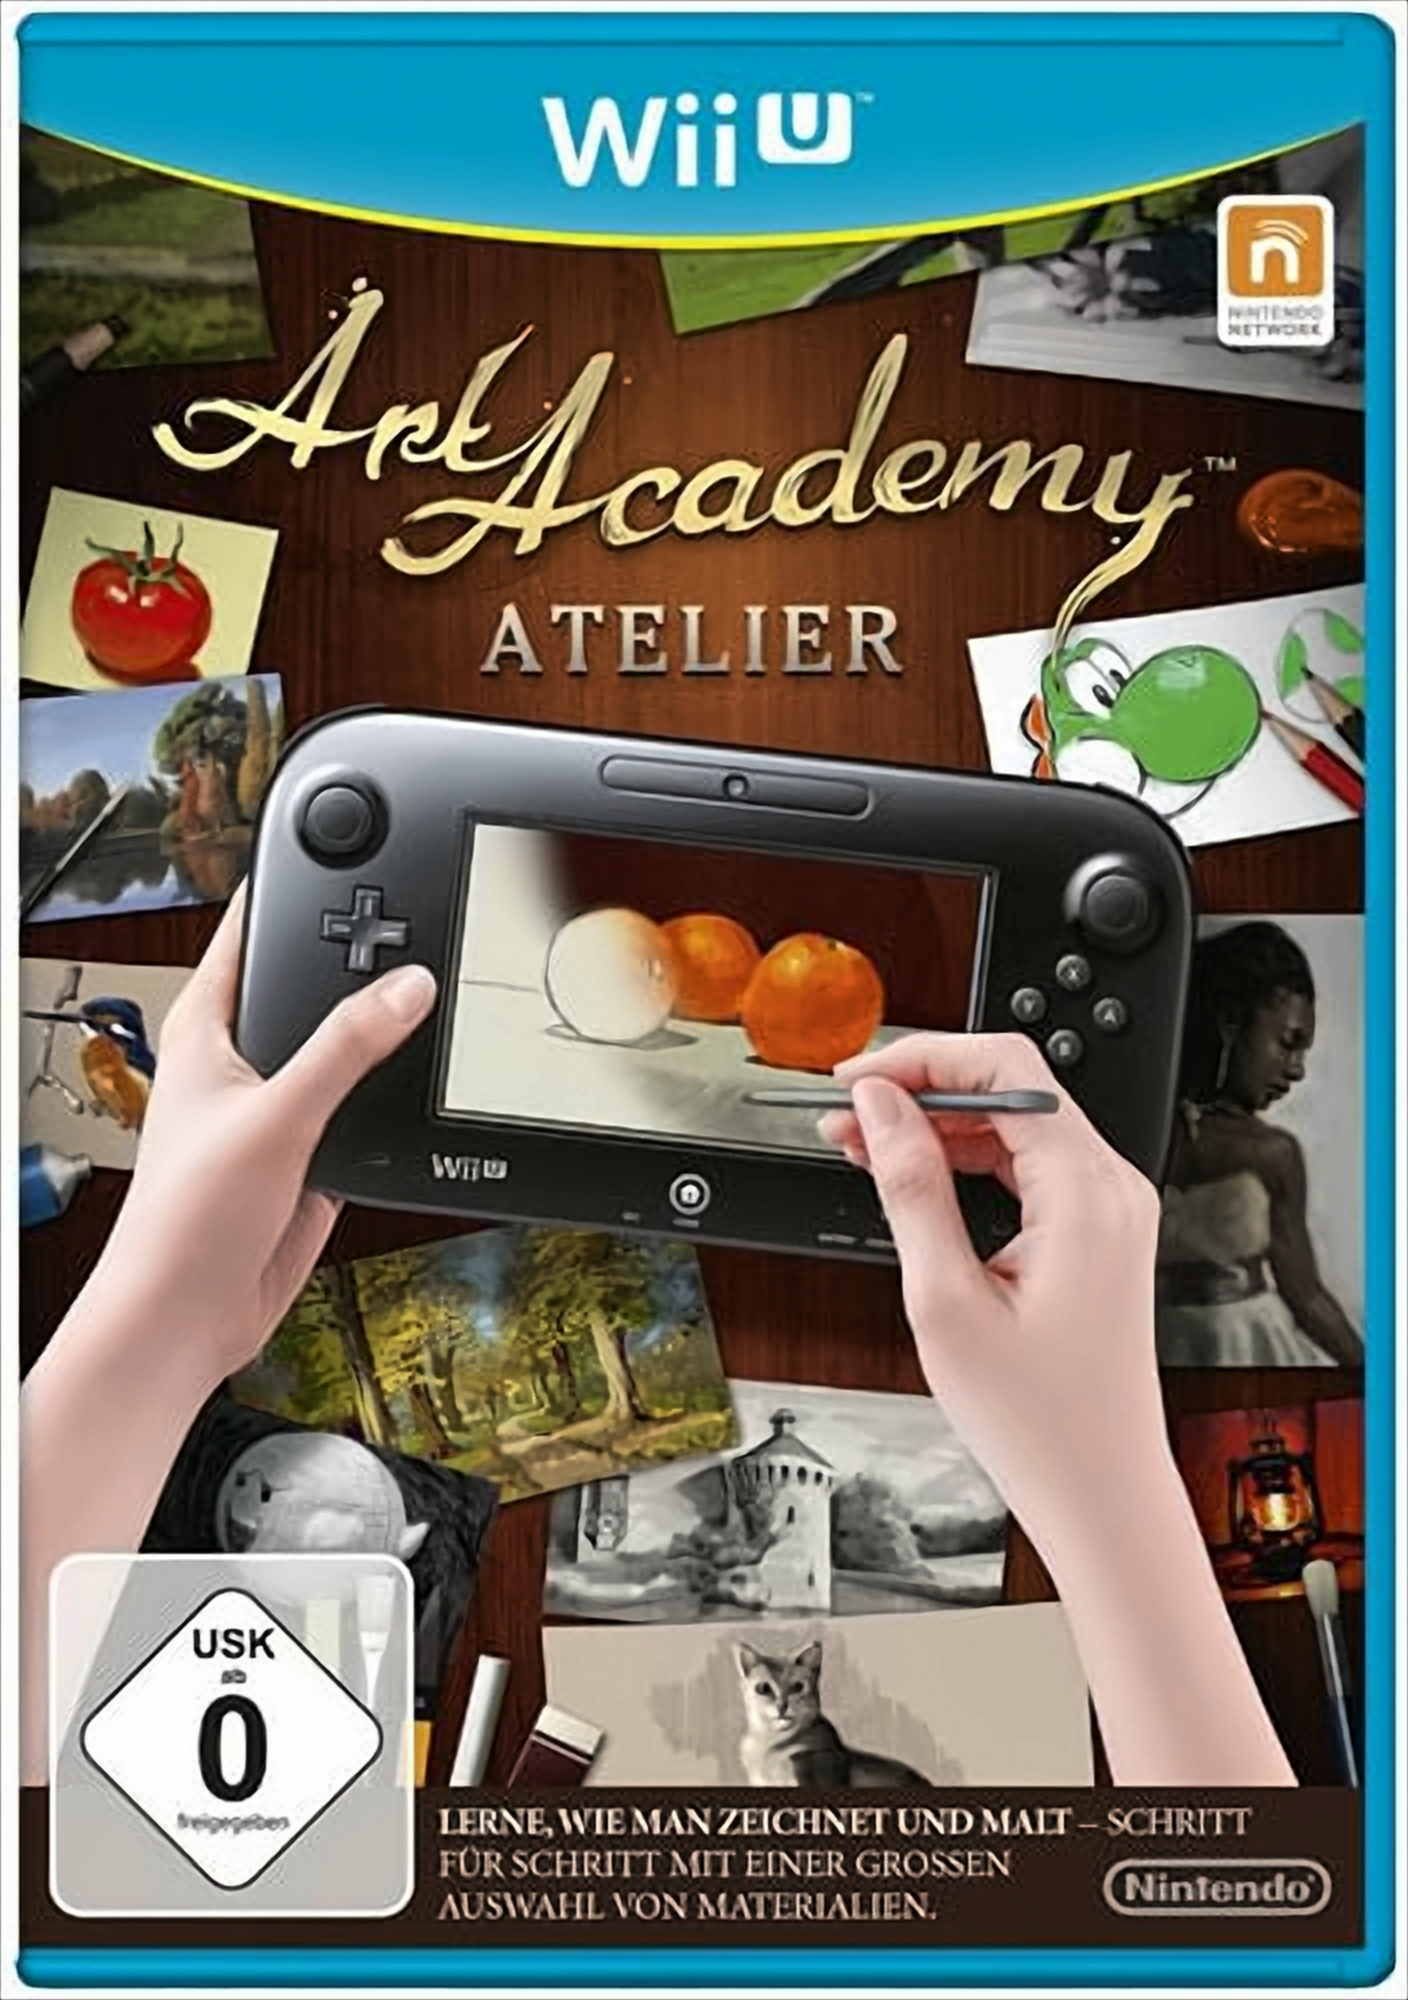 Academy - Atelier Wii] [Nintendo Art